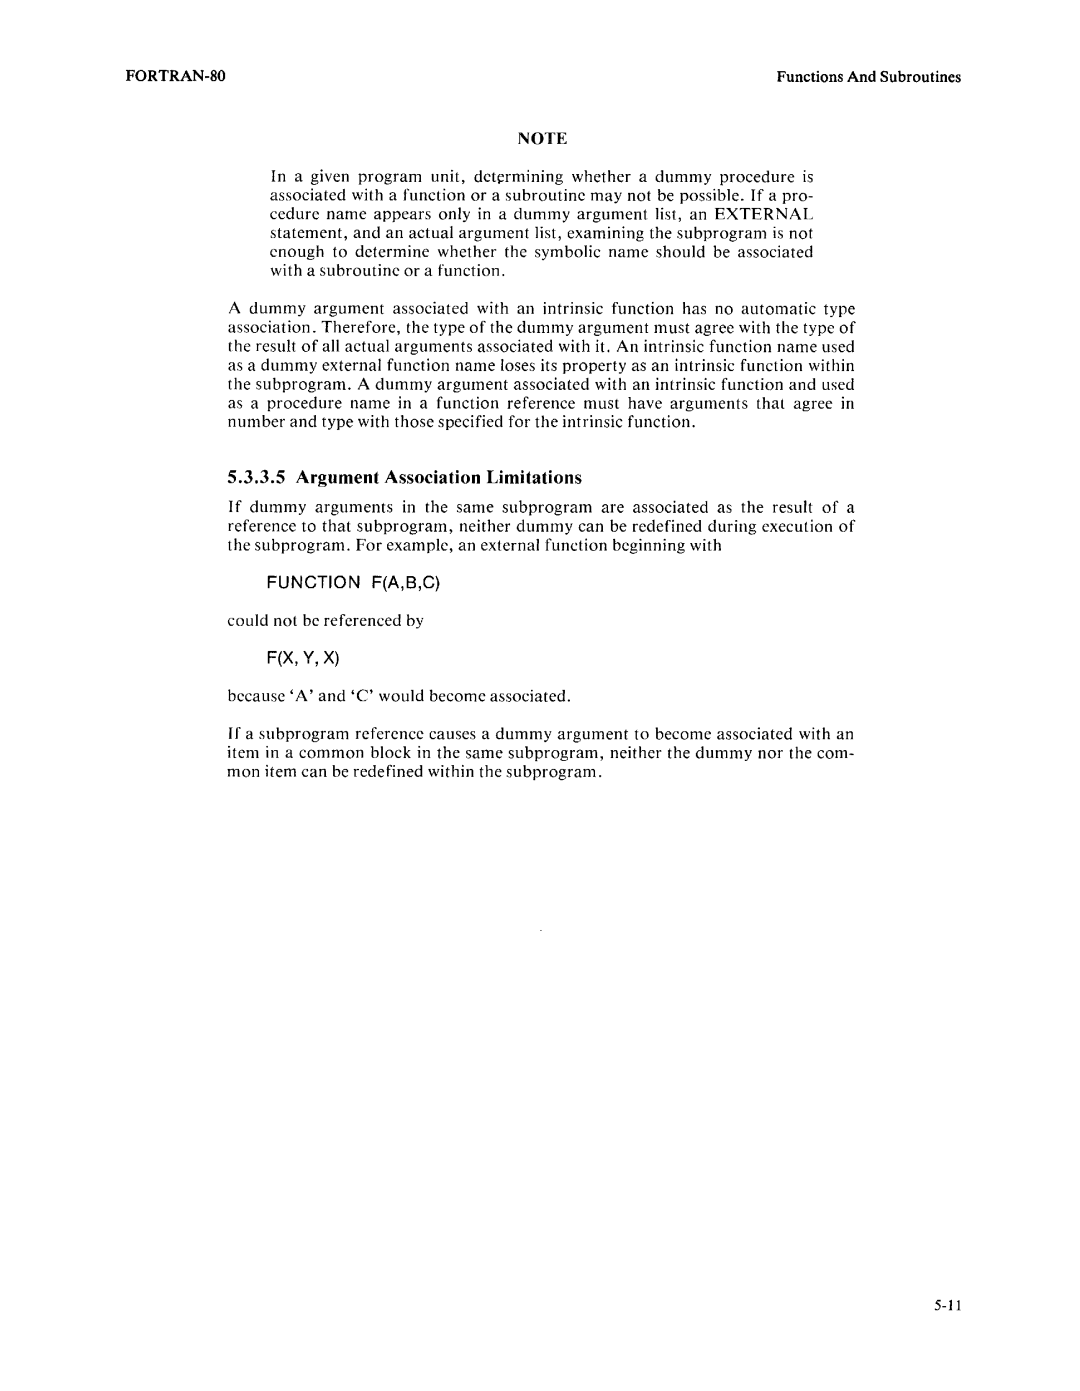 Intel fortran-80 manual 5.3.3.5Argument Association Limitations, Fx, Y 